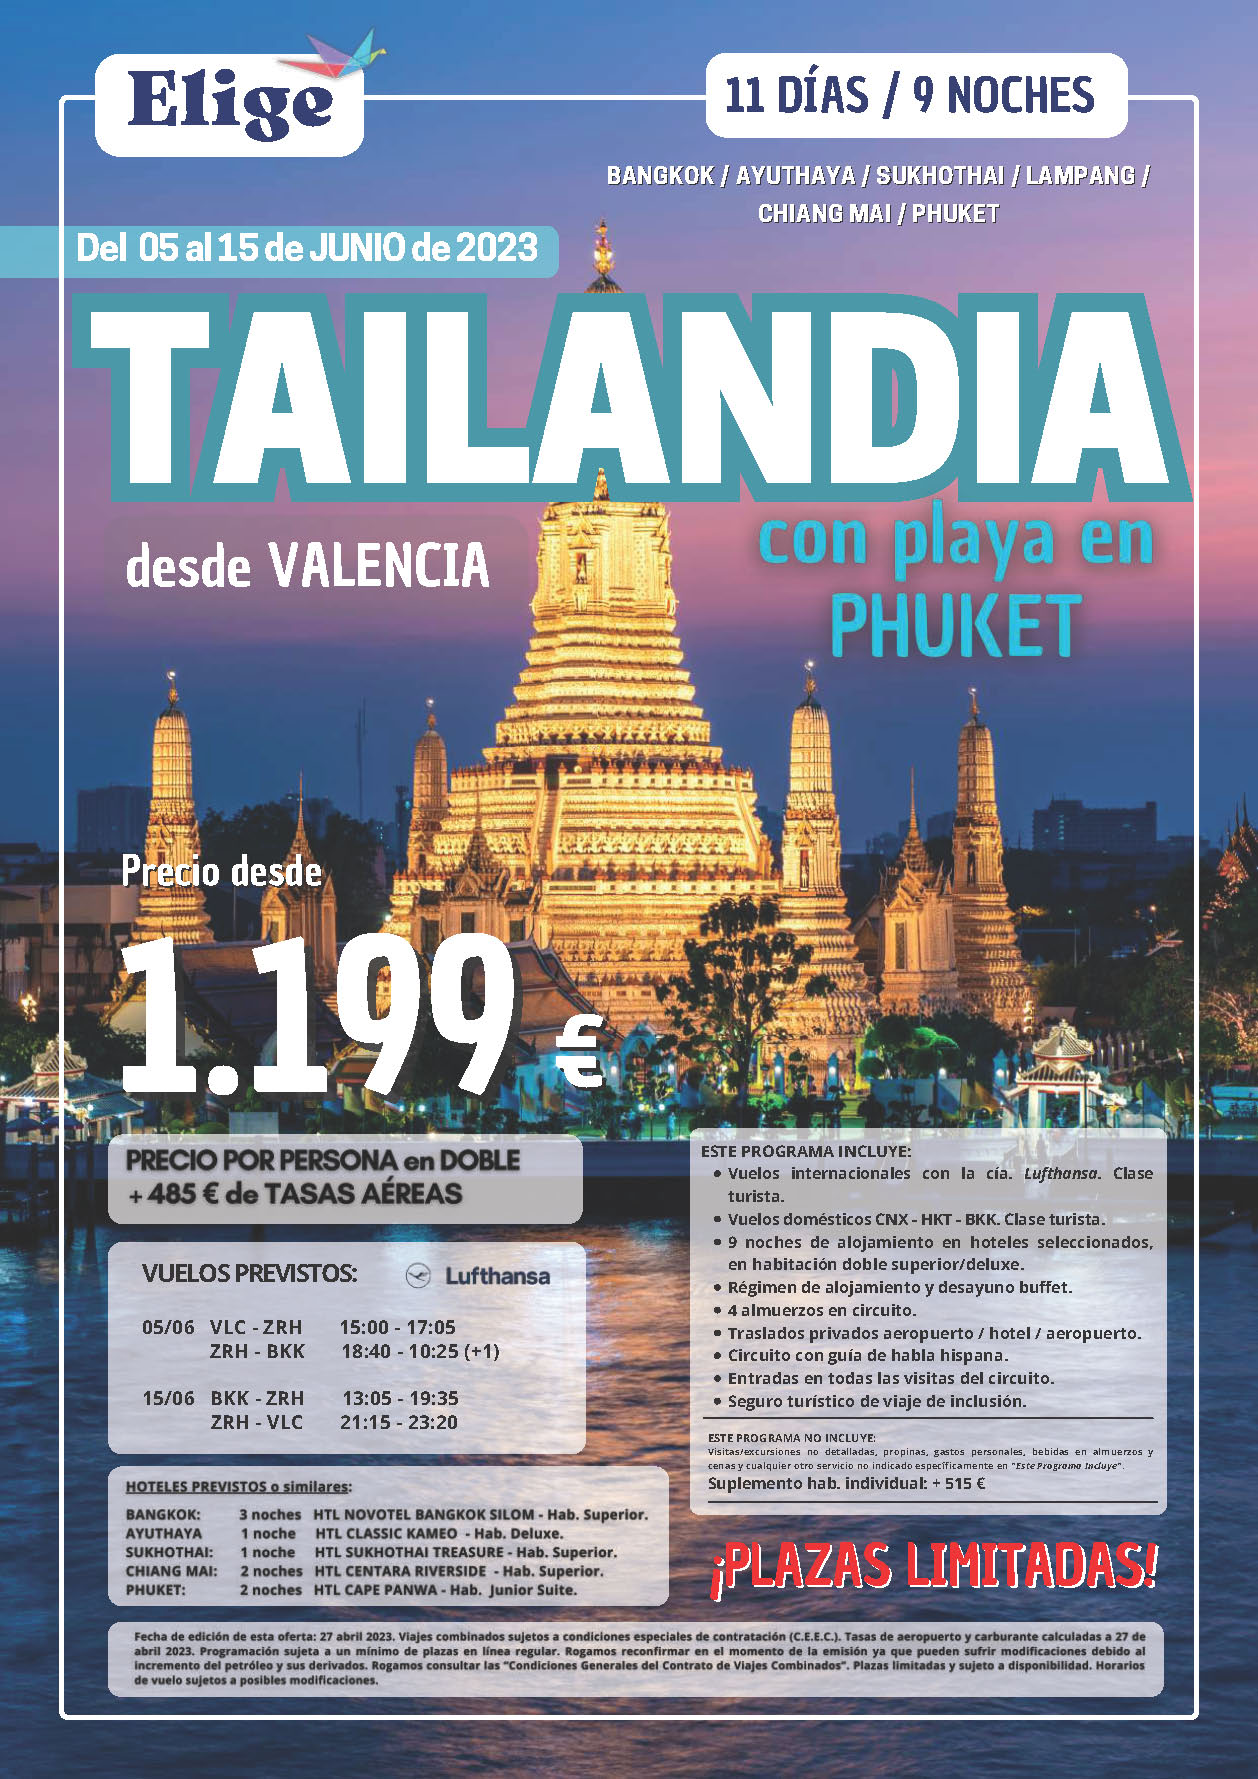 Oferta Elige tu Viaje circuito Thailandia con playa de Phuket 11 dias salidas desde Valencia Junio 2023 vuelos Lufthansa